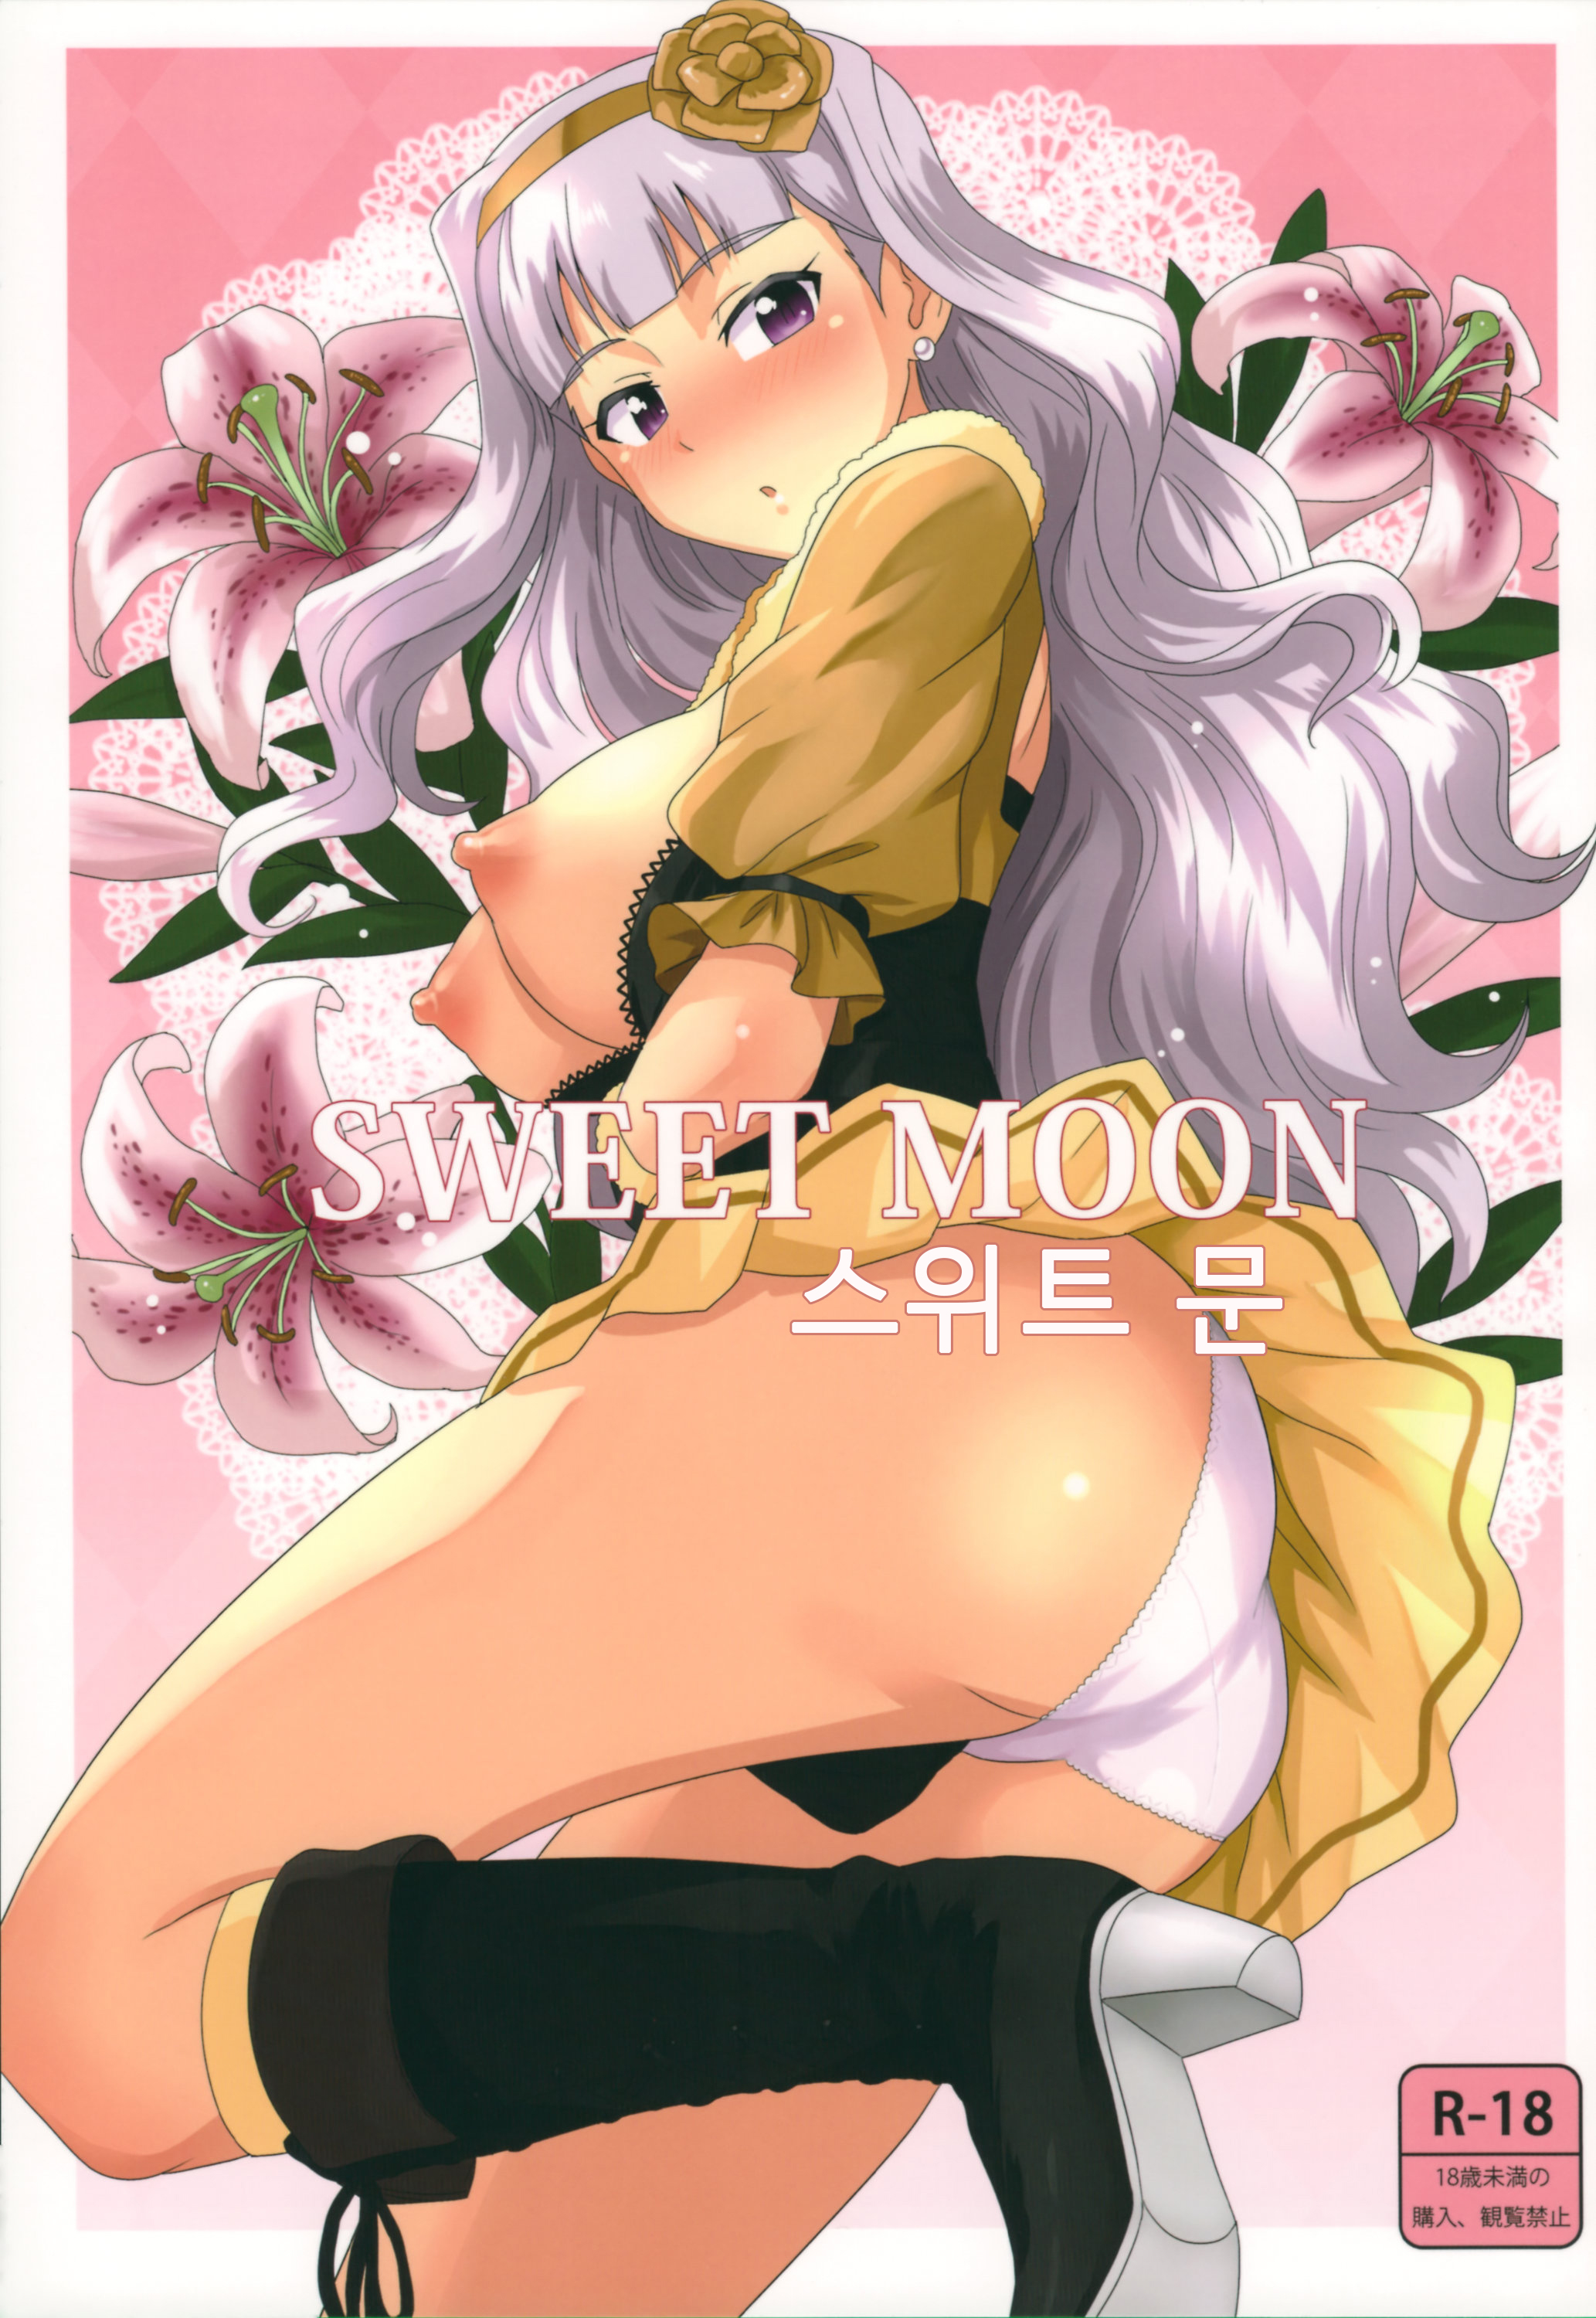 SWEET MOON by Tsurui Hentai Comics